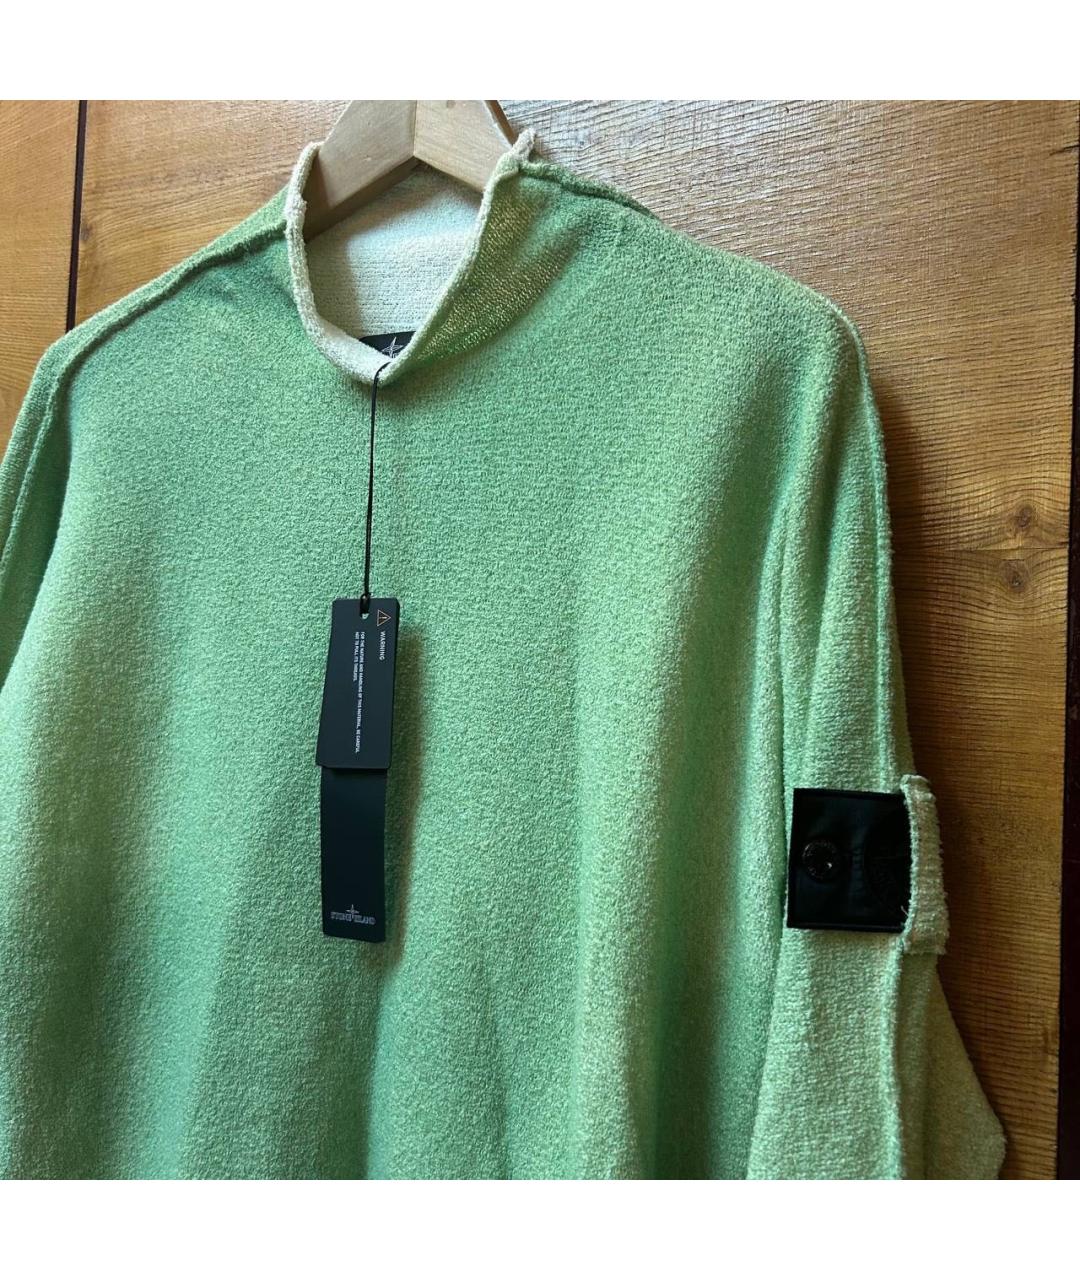 STONE ISLAND SHADOW PROJECT Зеленый хлопковый джемпер / свитер, фото 2